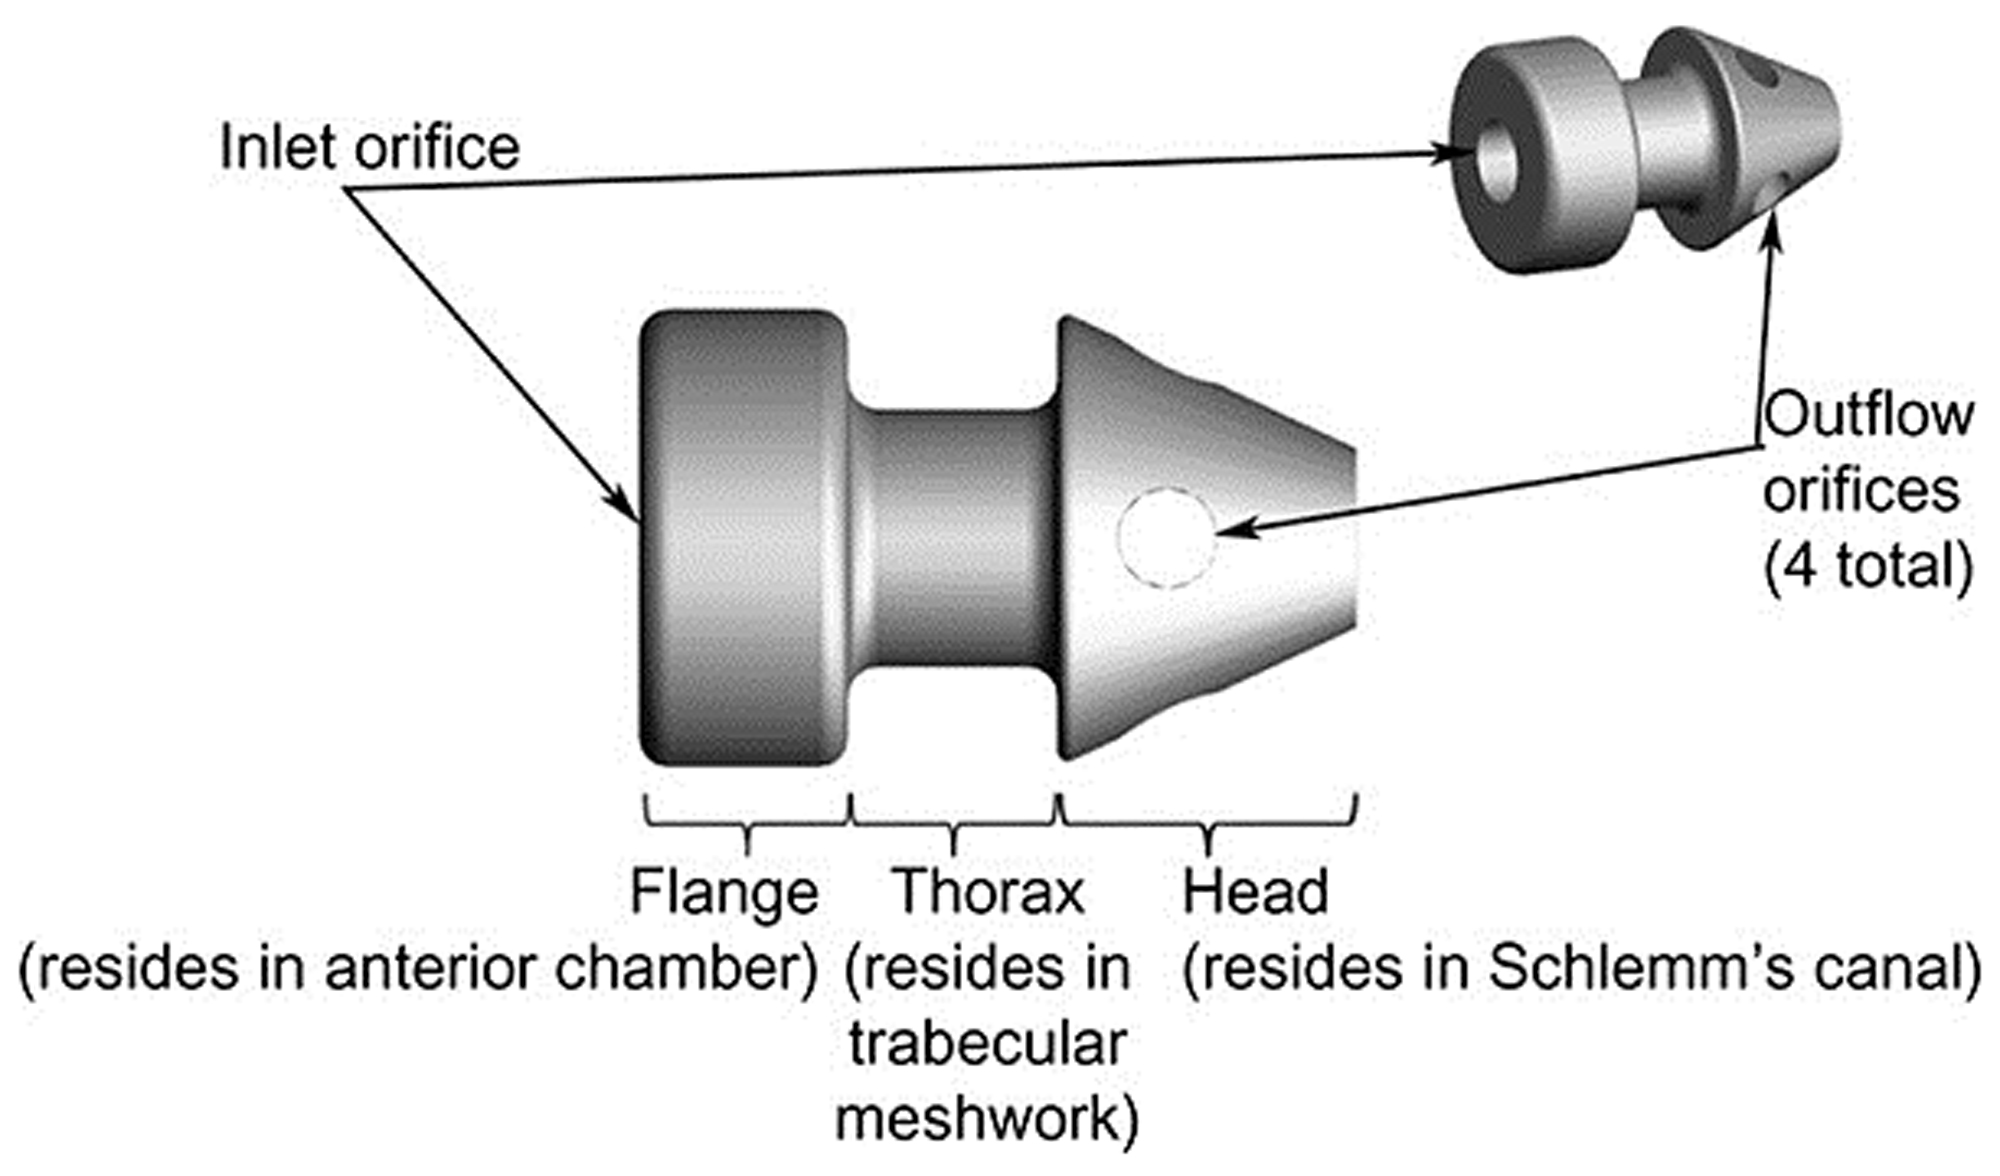 Figure 2. iStent Inject Source: Belovay et al. J Cataract Refract Surg. 2012;38(11):1911-7.[8]